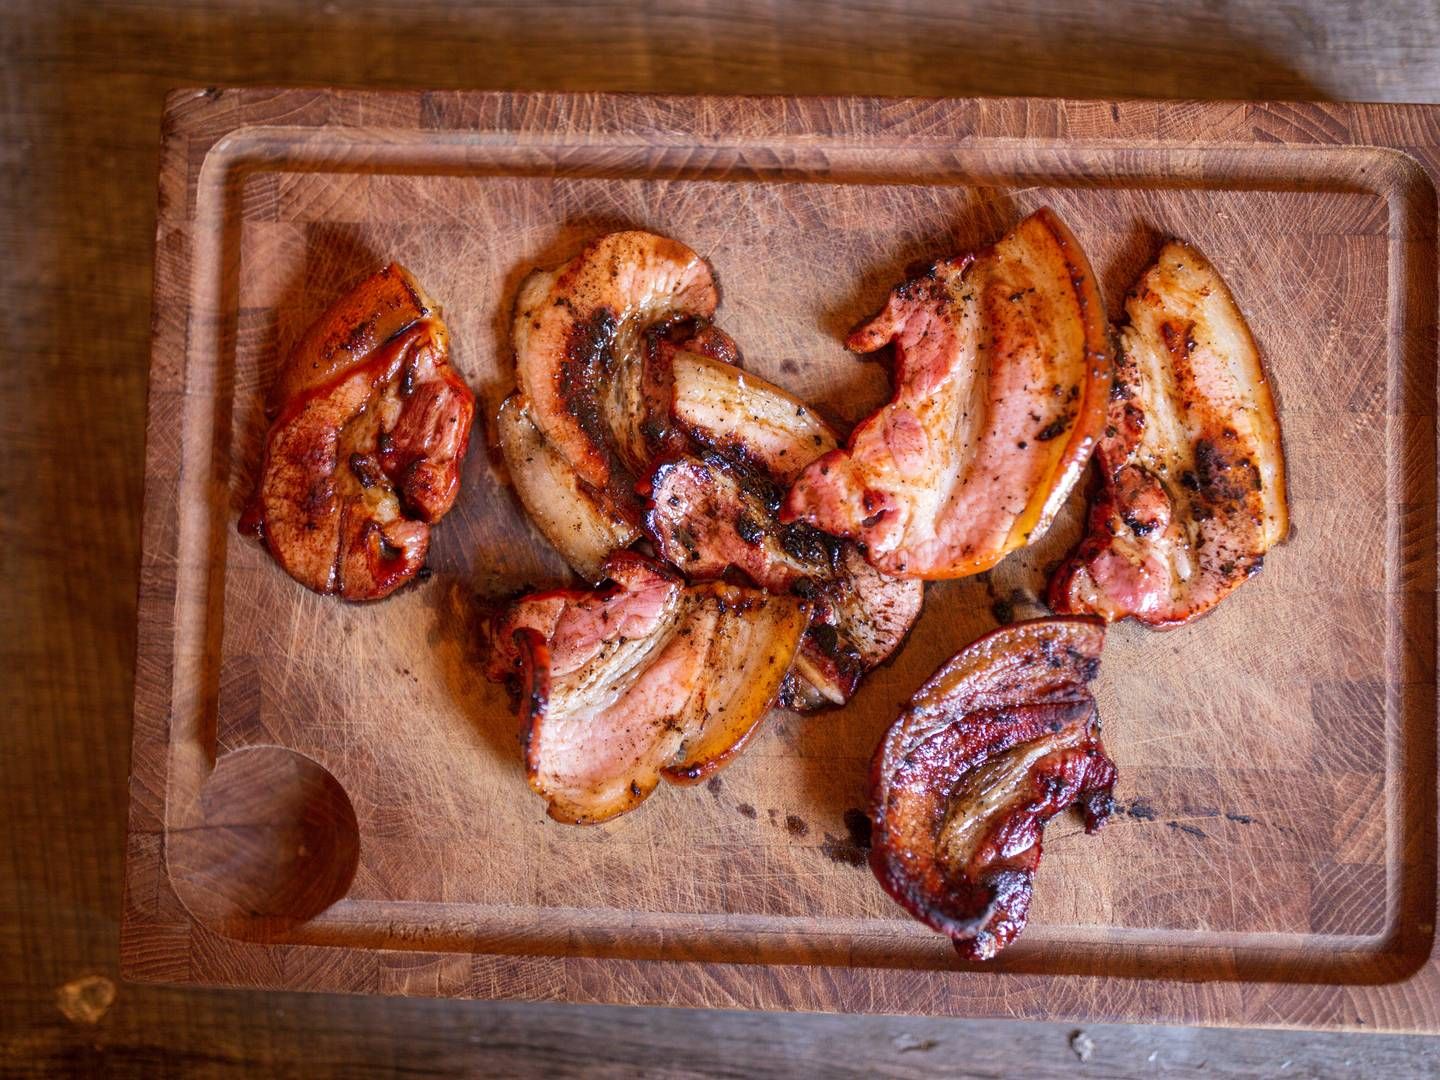 Finnebrogue er kendt for bacon. | Foto: Miriam Dalsgaard